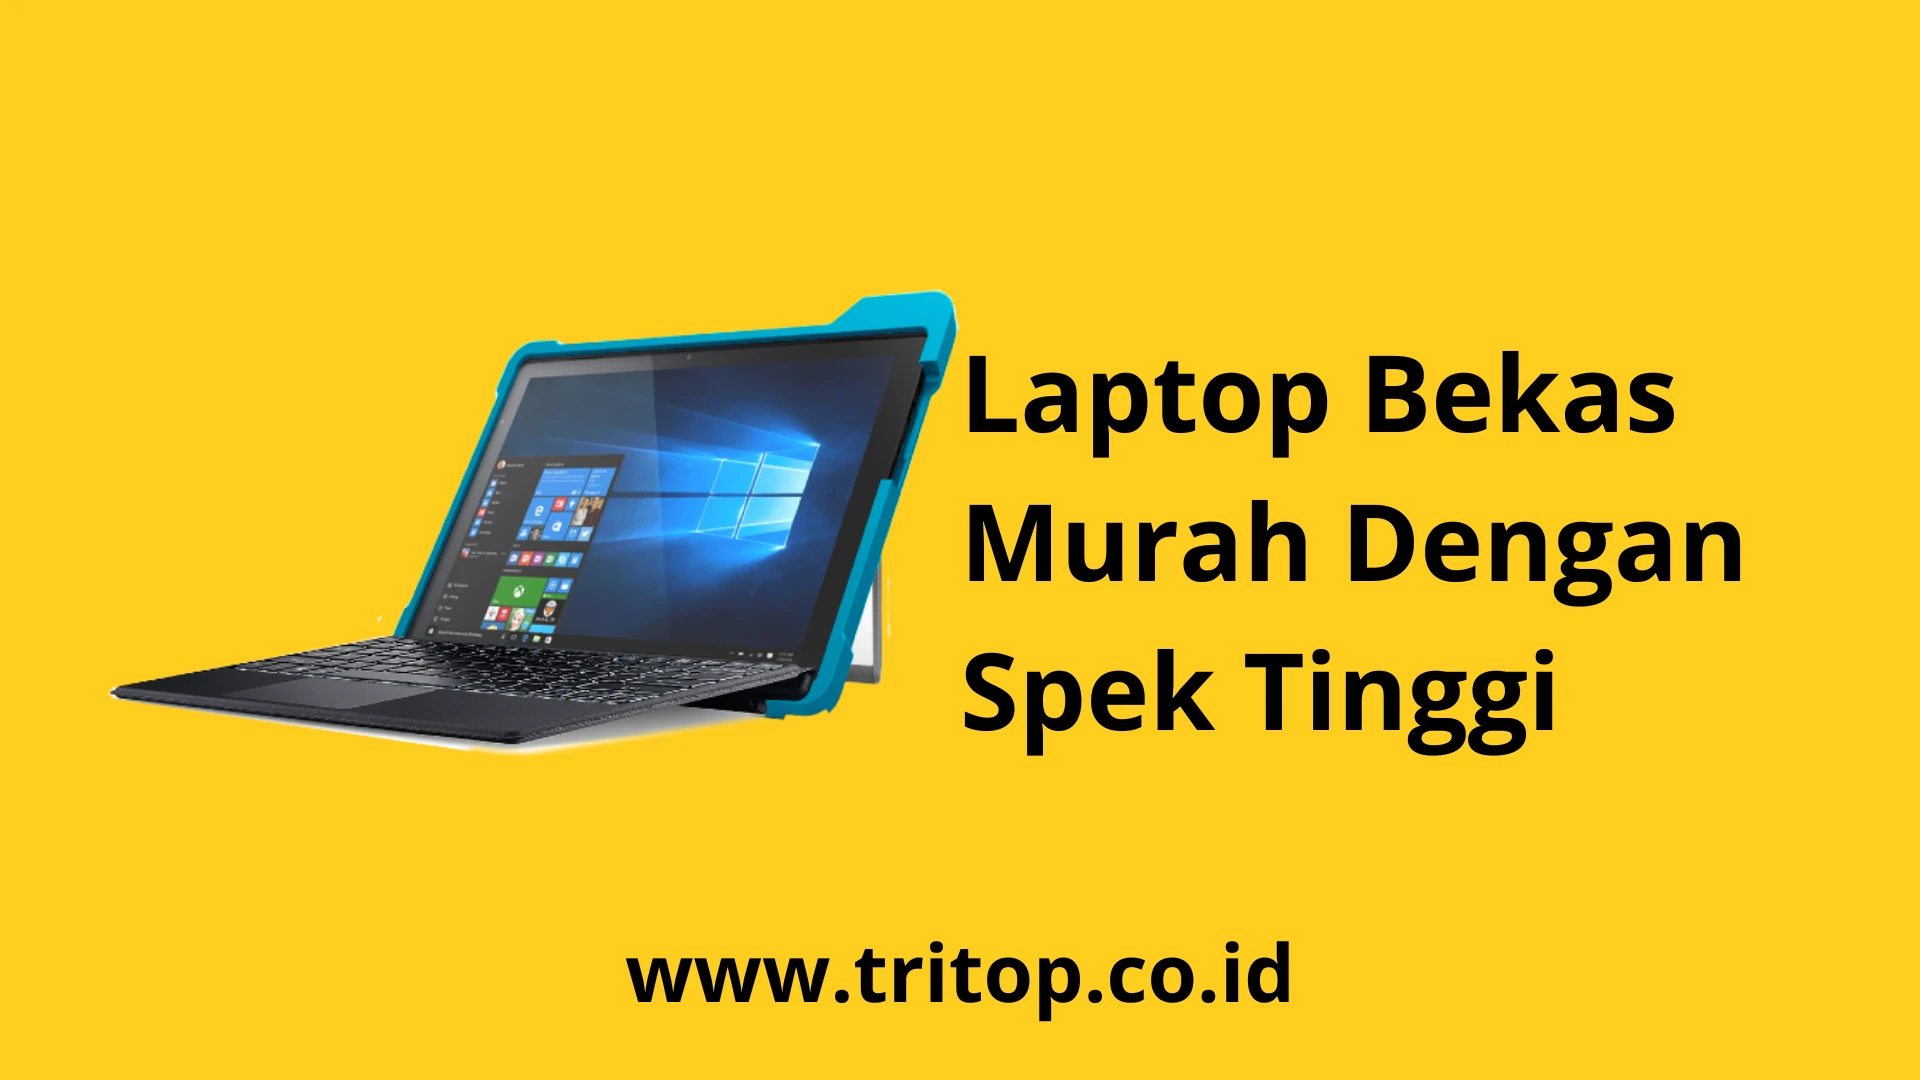 Laptop Bekas Murah Spek Tinggi Tritop.co.id